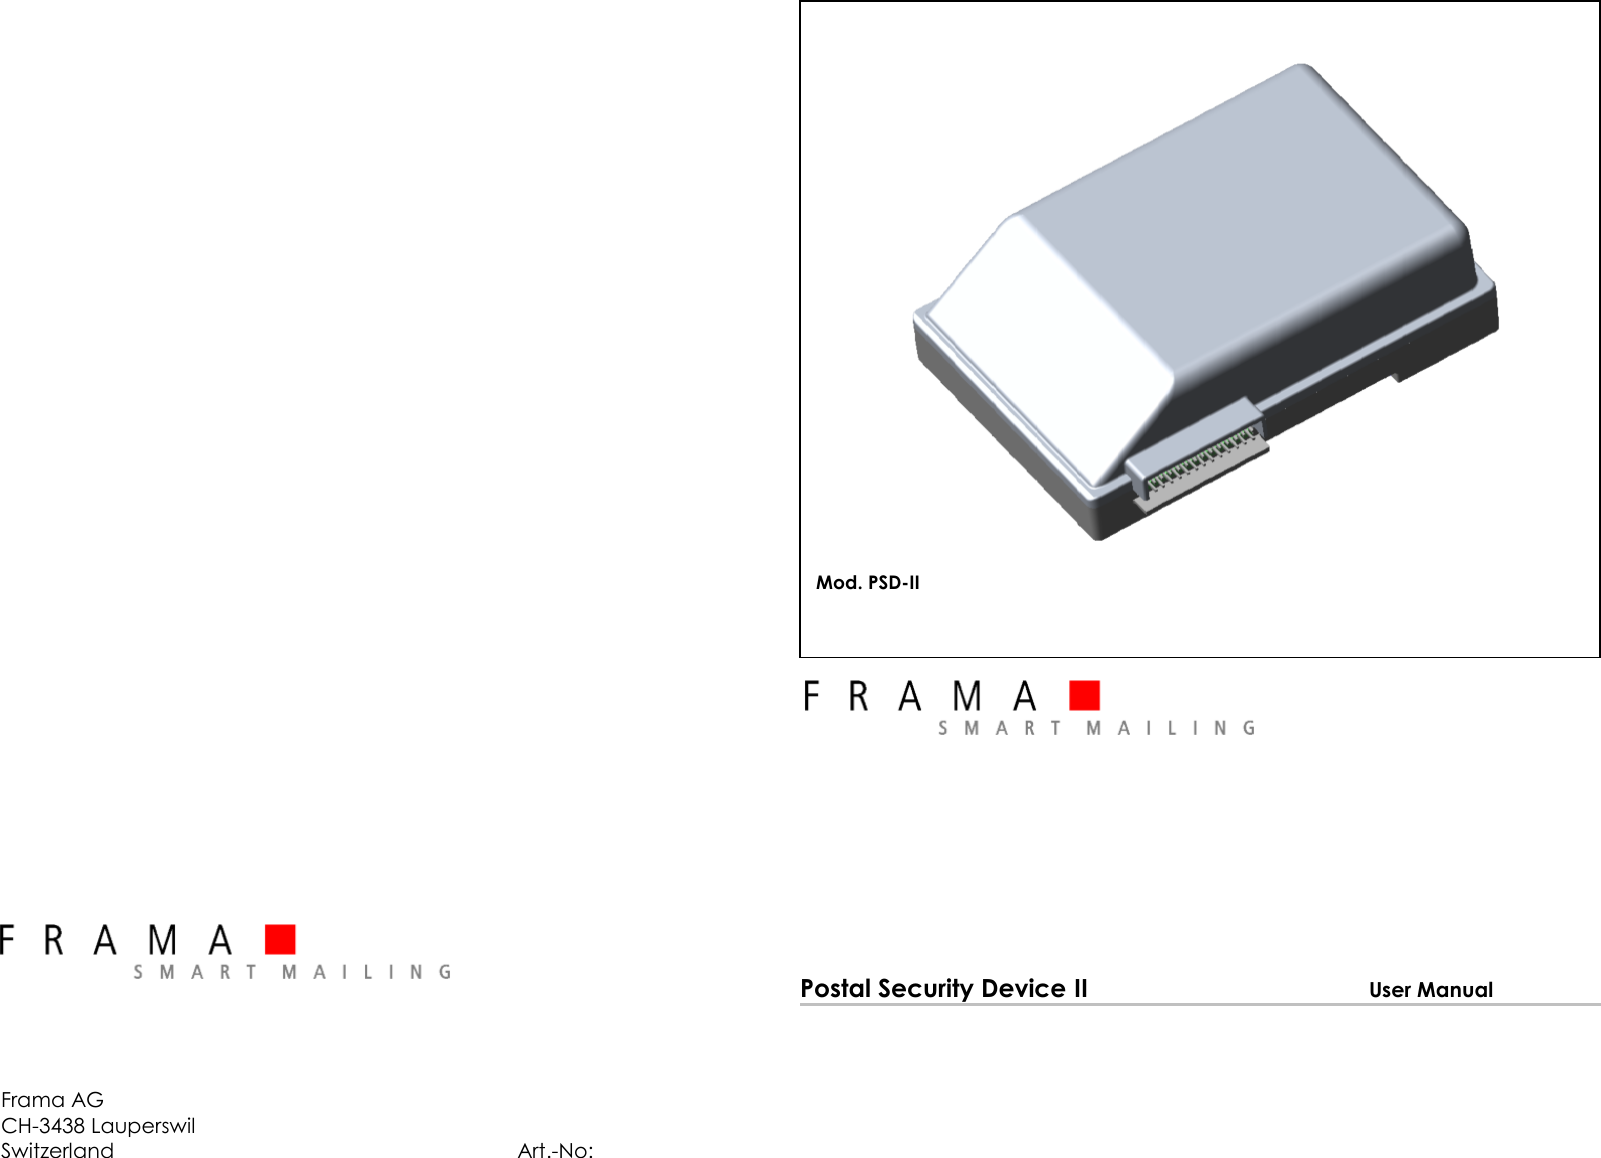 Frama AGCH-3438 LauperswilSwitzerland Art.-No:Postal Security Device II User ManualMod. PSD-II